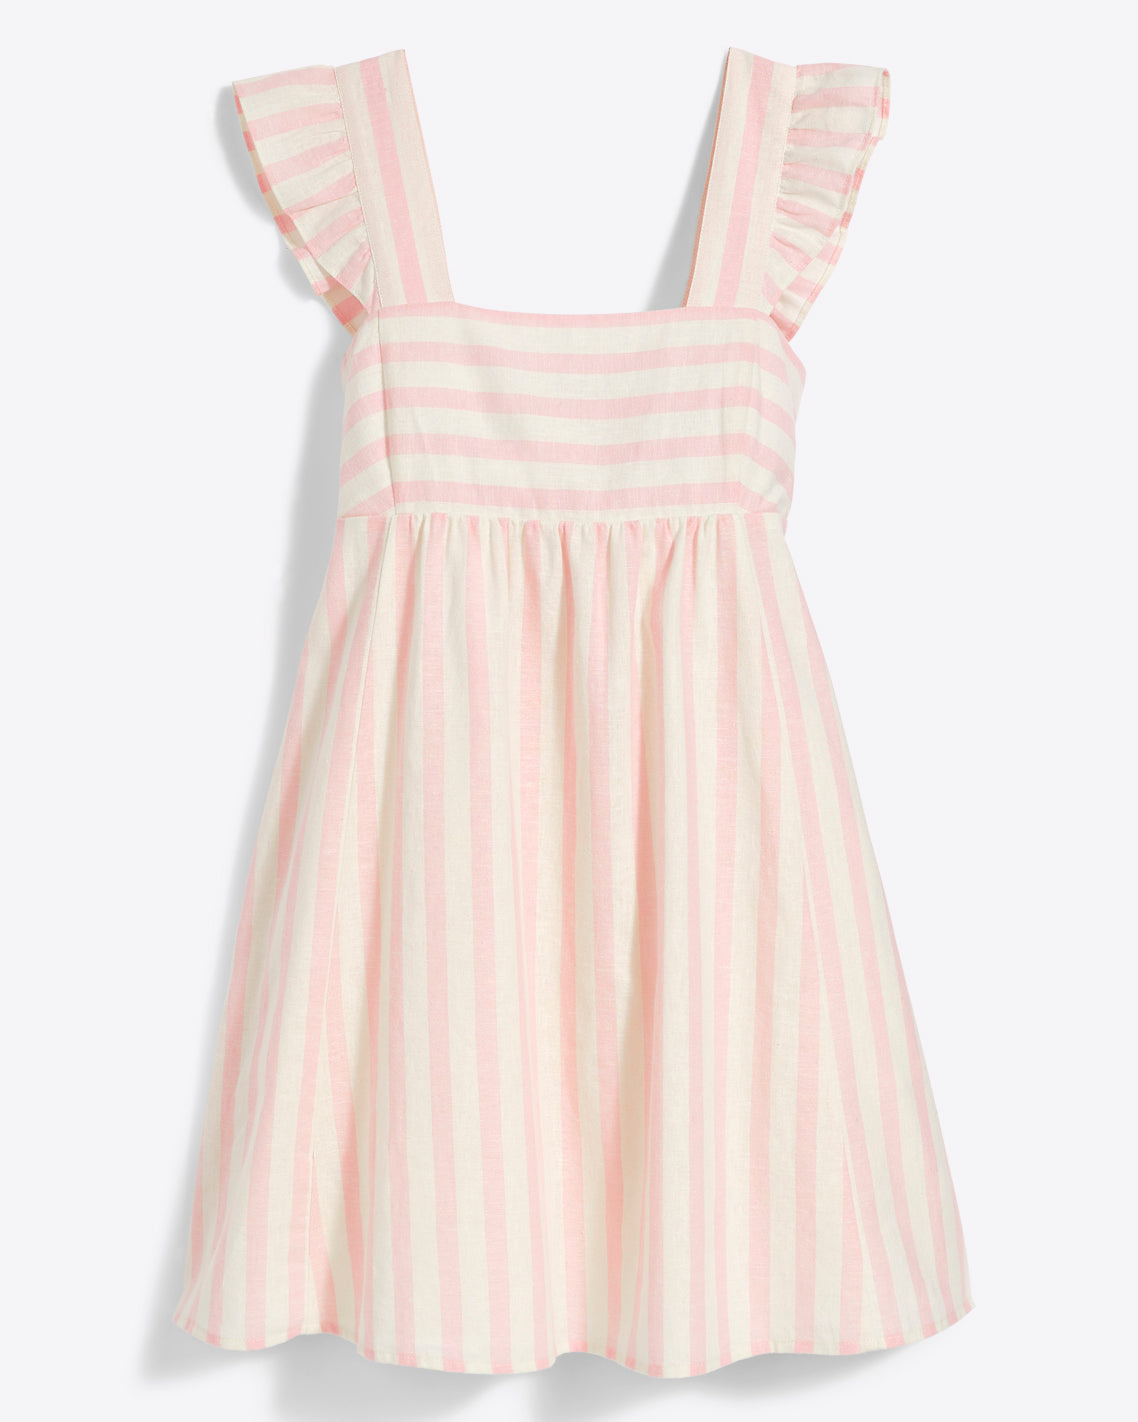 Maddie Babydoll Dress in Pink Cabana Stripe